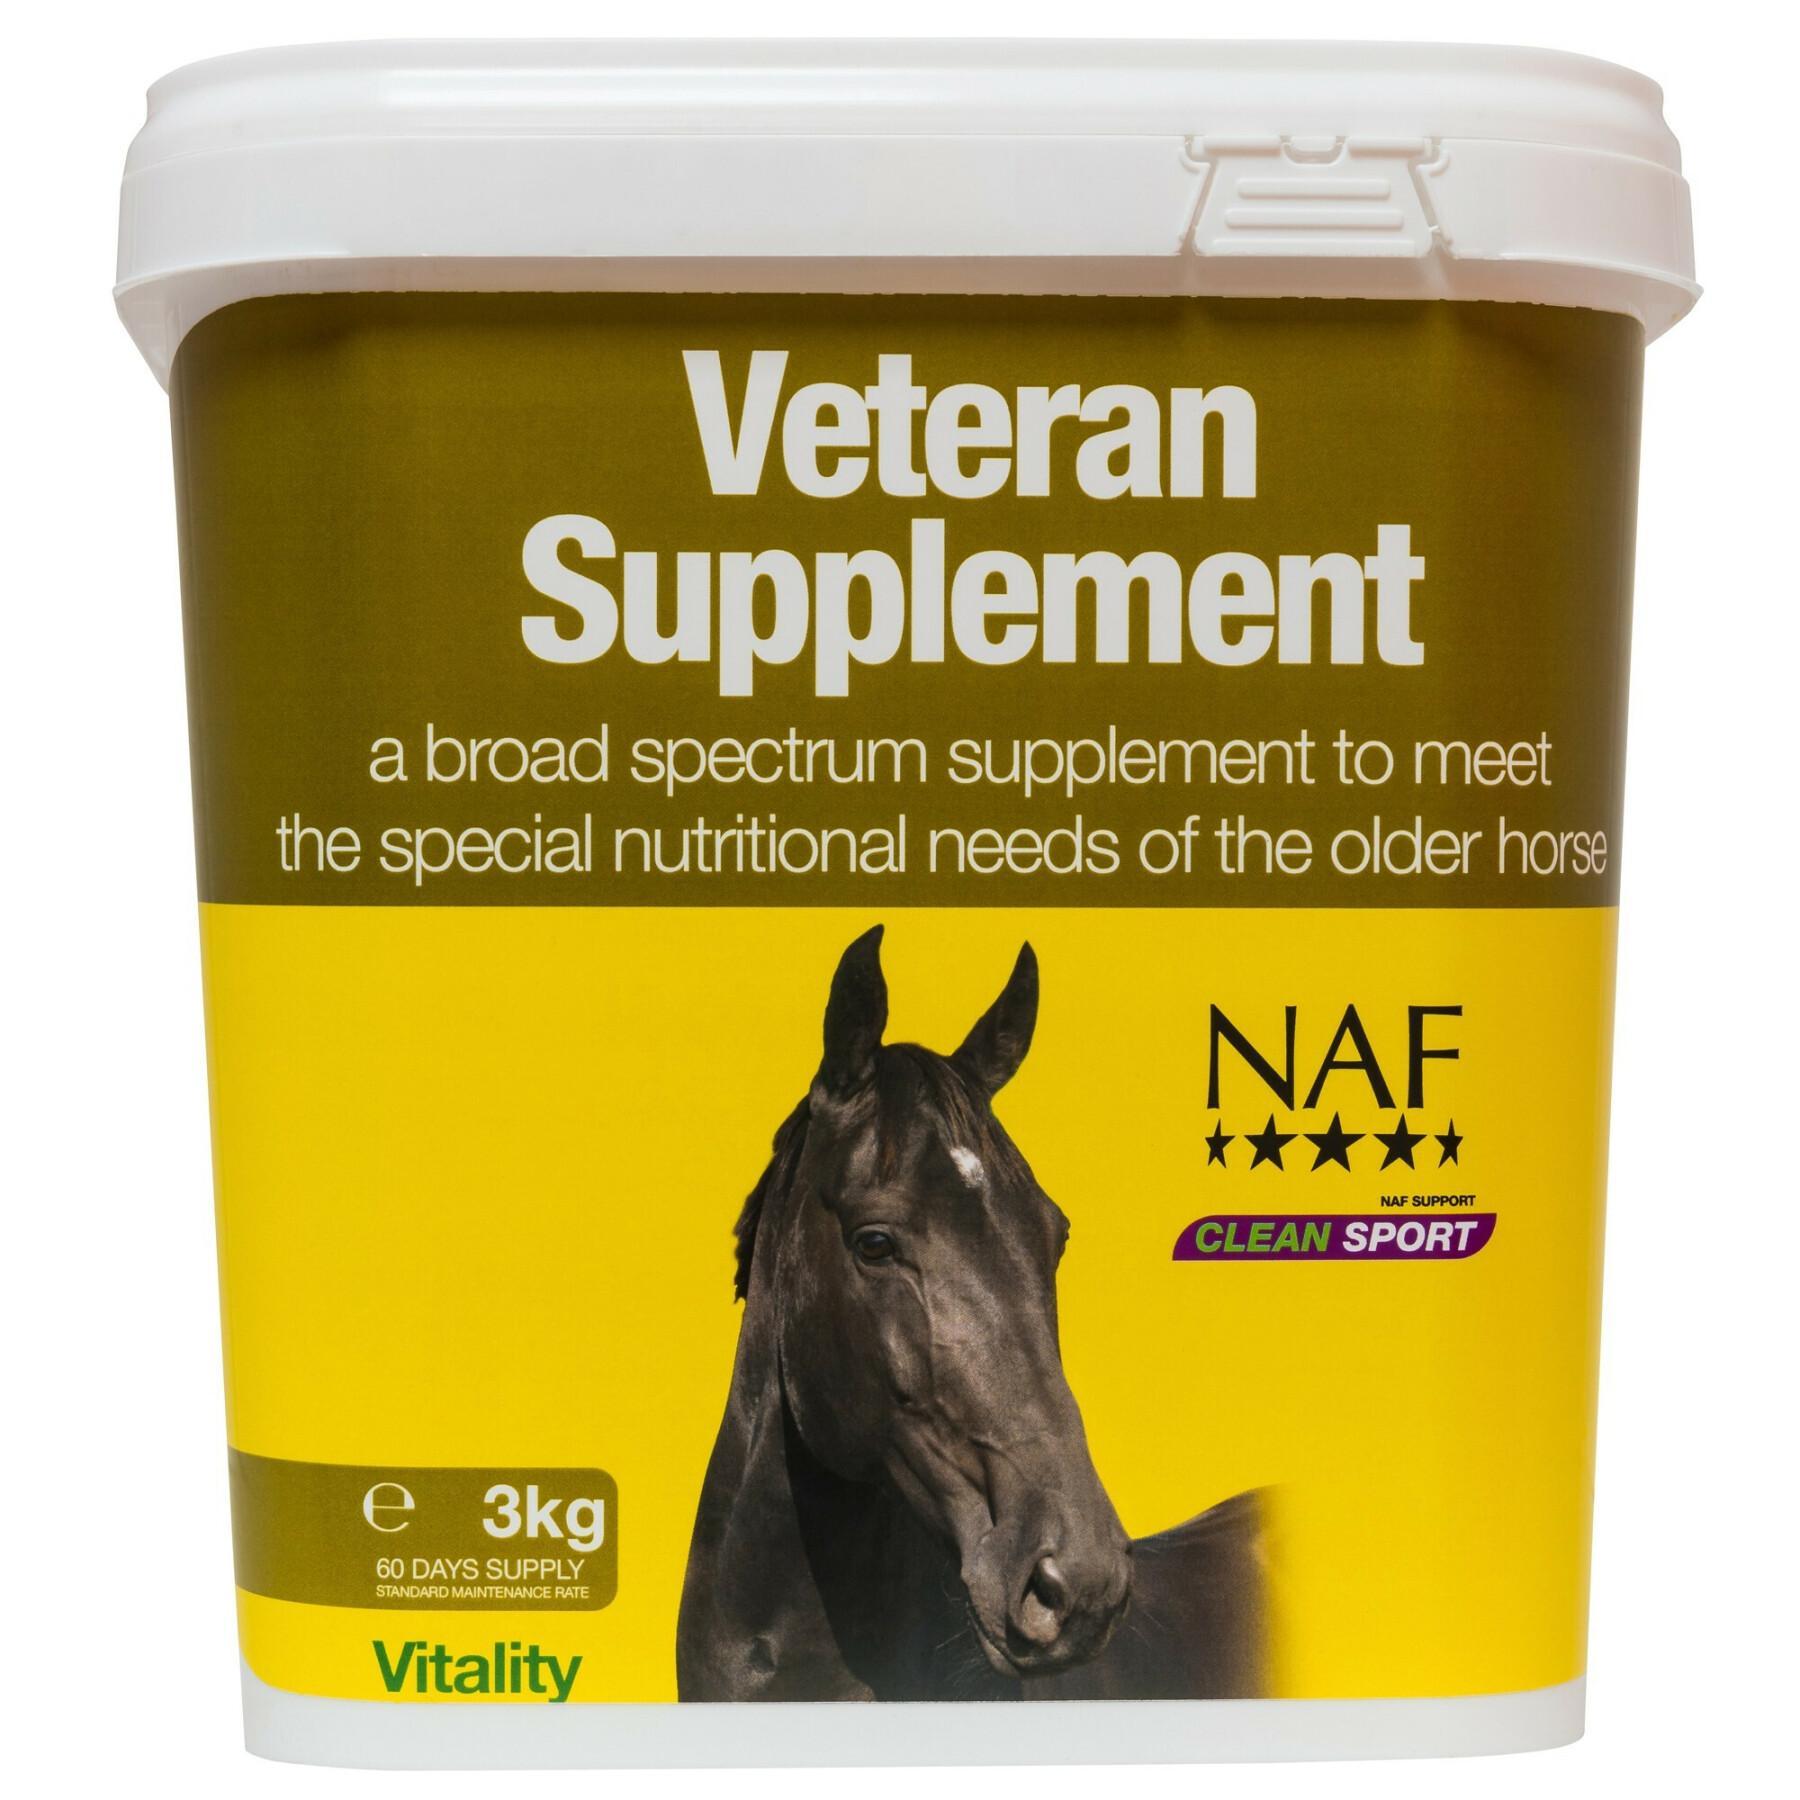 Ergänzung alimentaire für älteres Pferdal NAF A